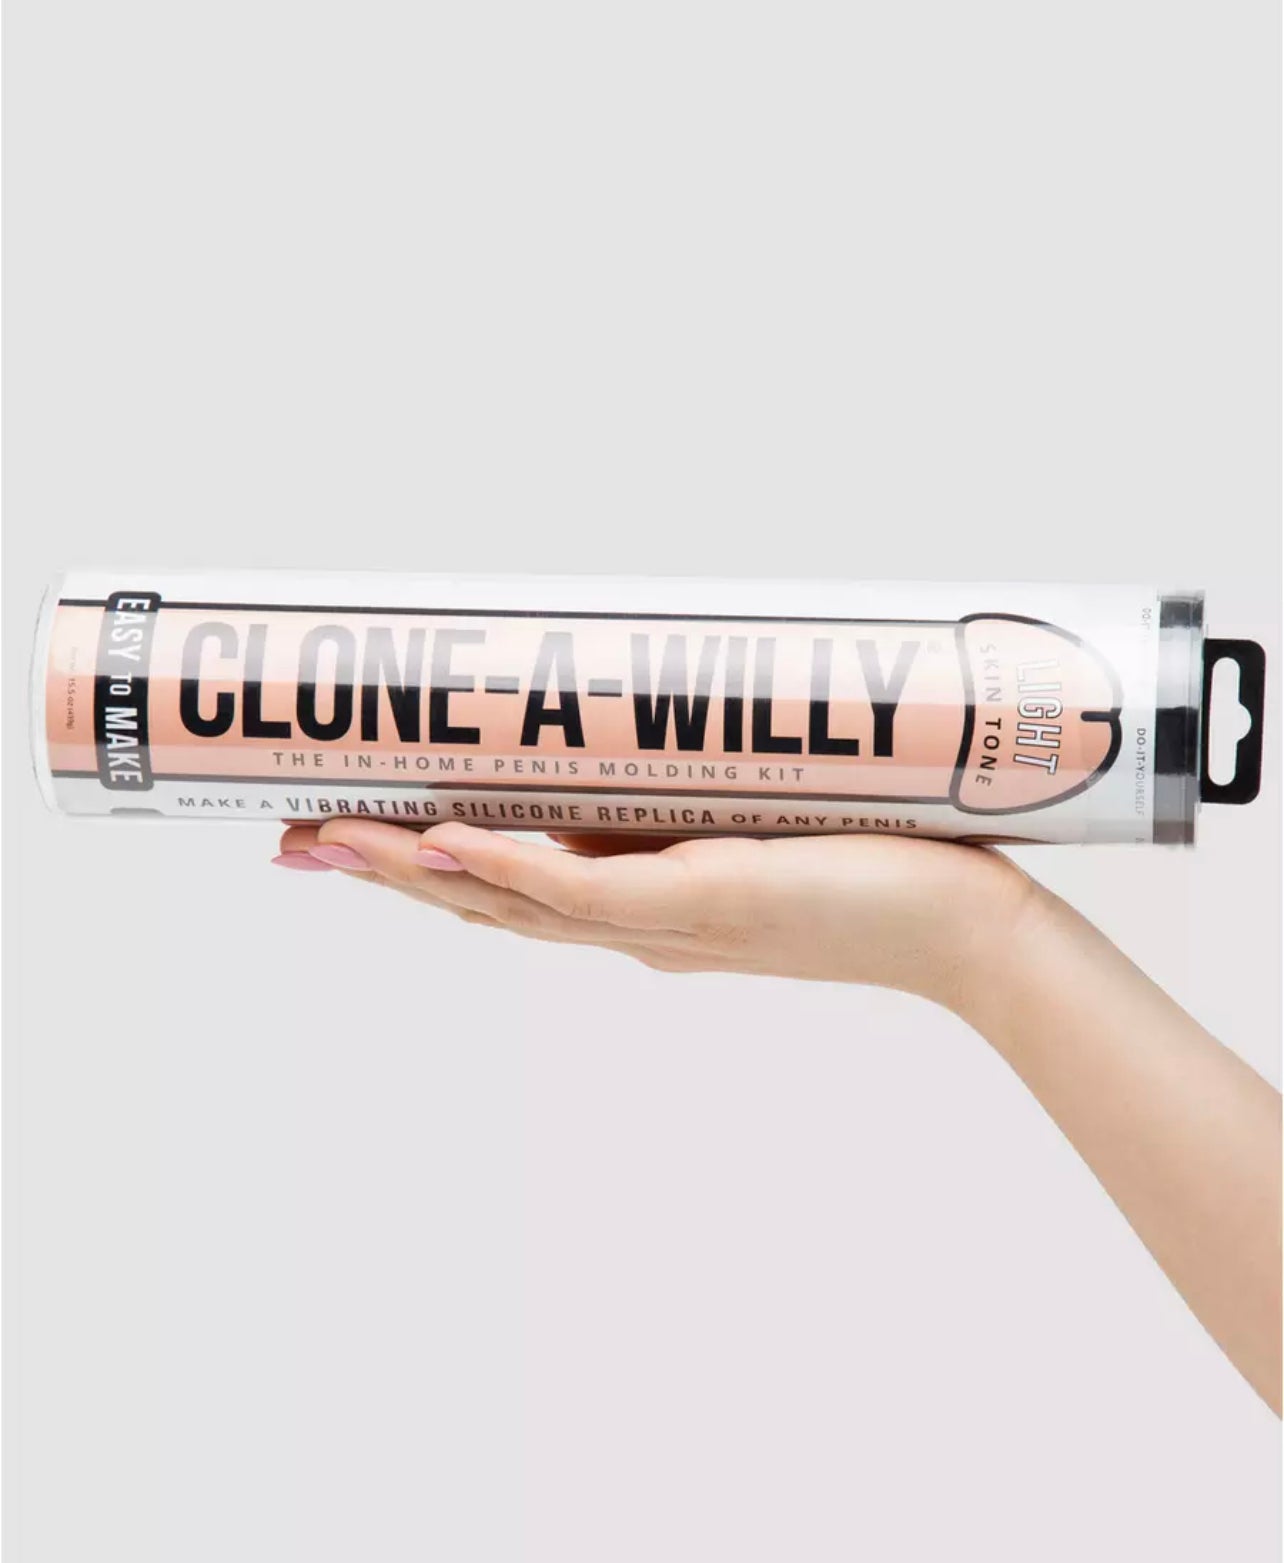 Light Skin Tone | Clone A Willy DIY Dildo Kit